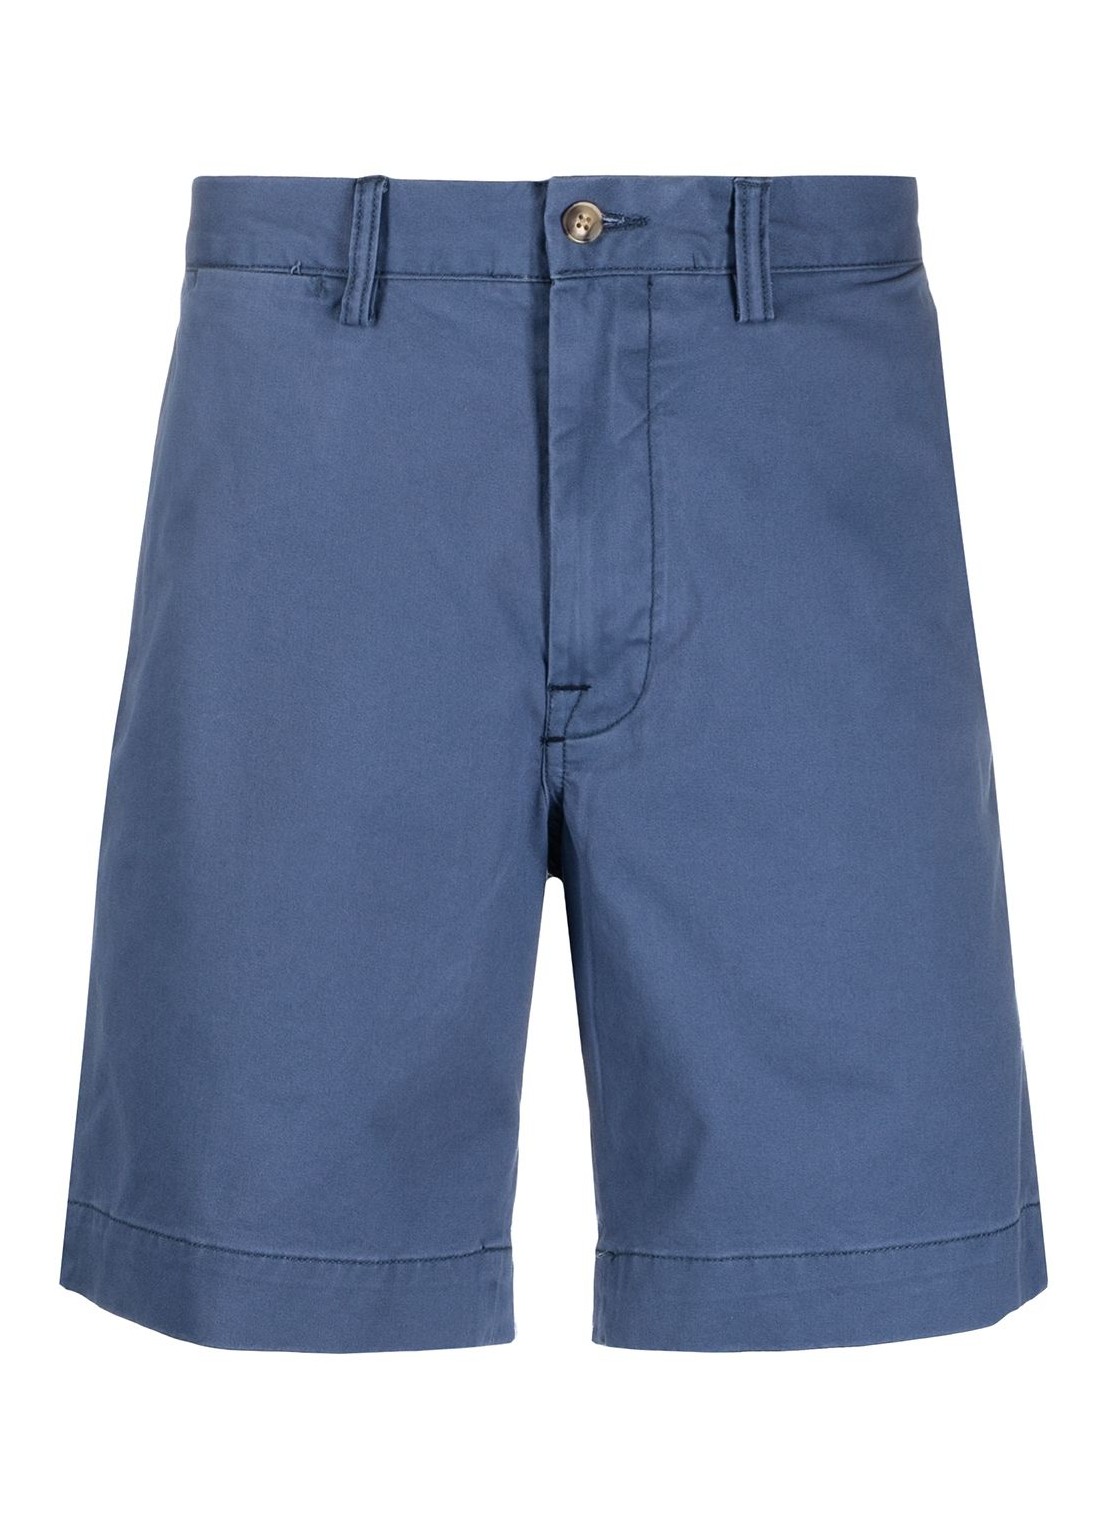 Pantalon corto polo ralph lauren short pant man stfbedford9s-flat-short 710799213045 nimes blue tall